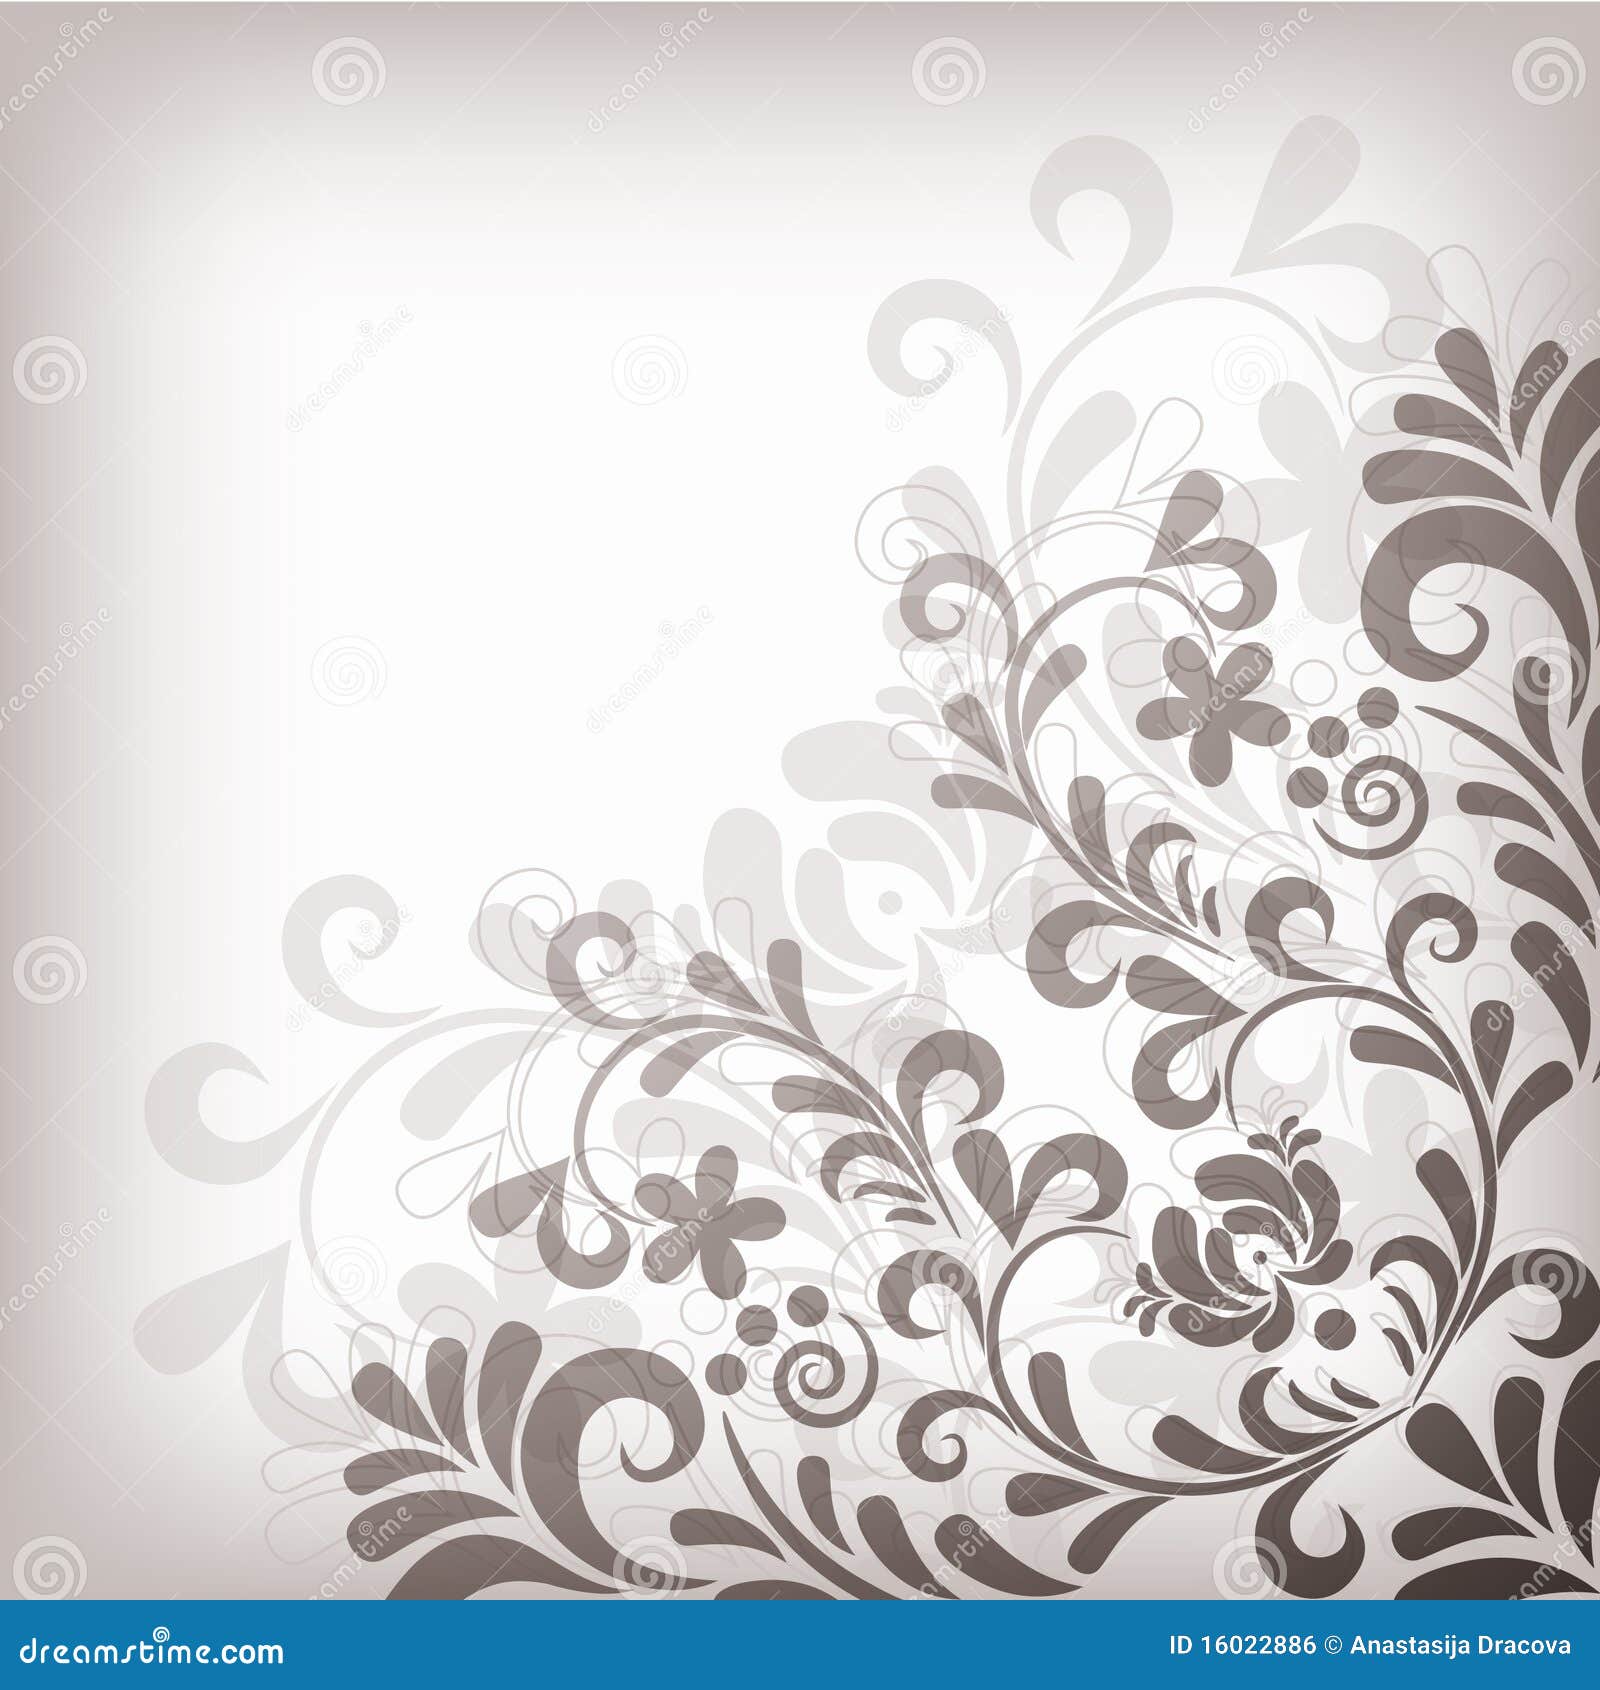 Soft floral background stock vector. Illustration of decoration - 16022886